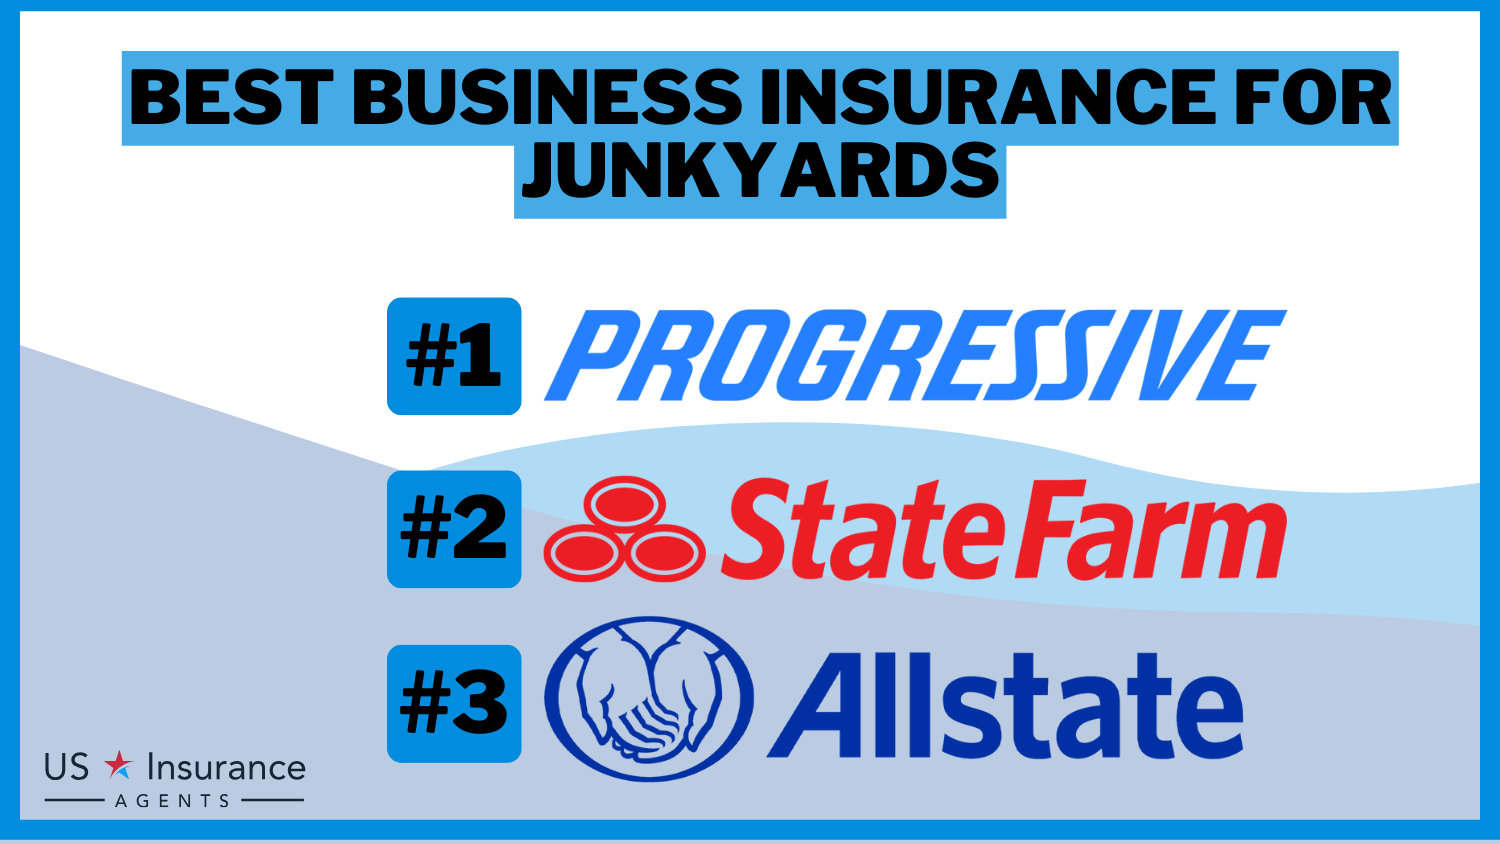 3 Best Business Insurance for Junkyards: Progressive, State Farm, and Allstate.